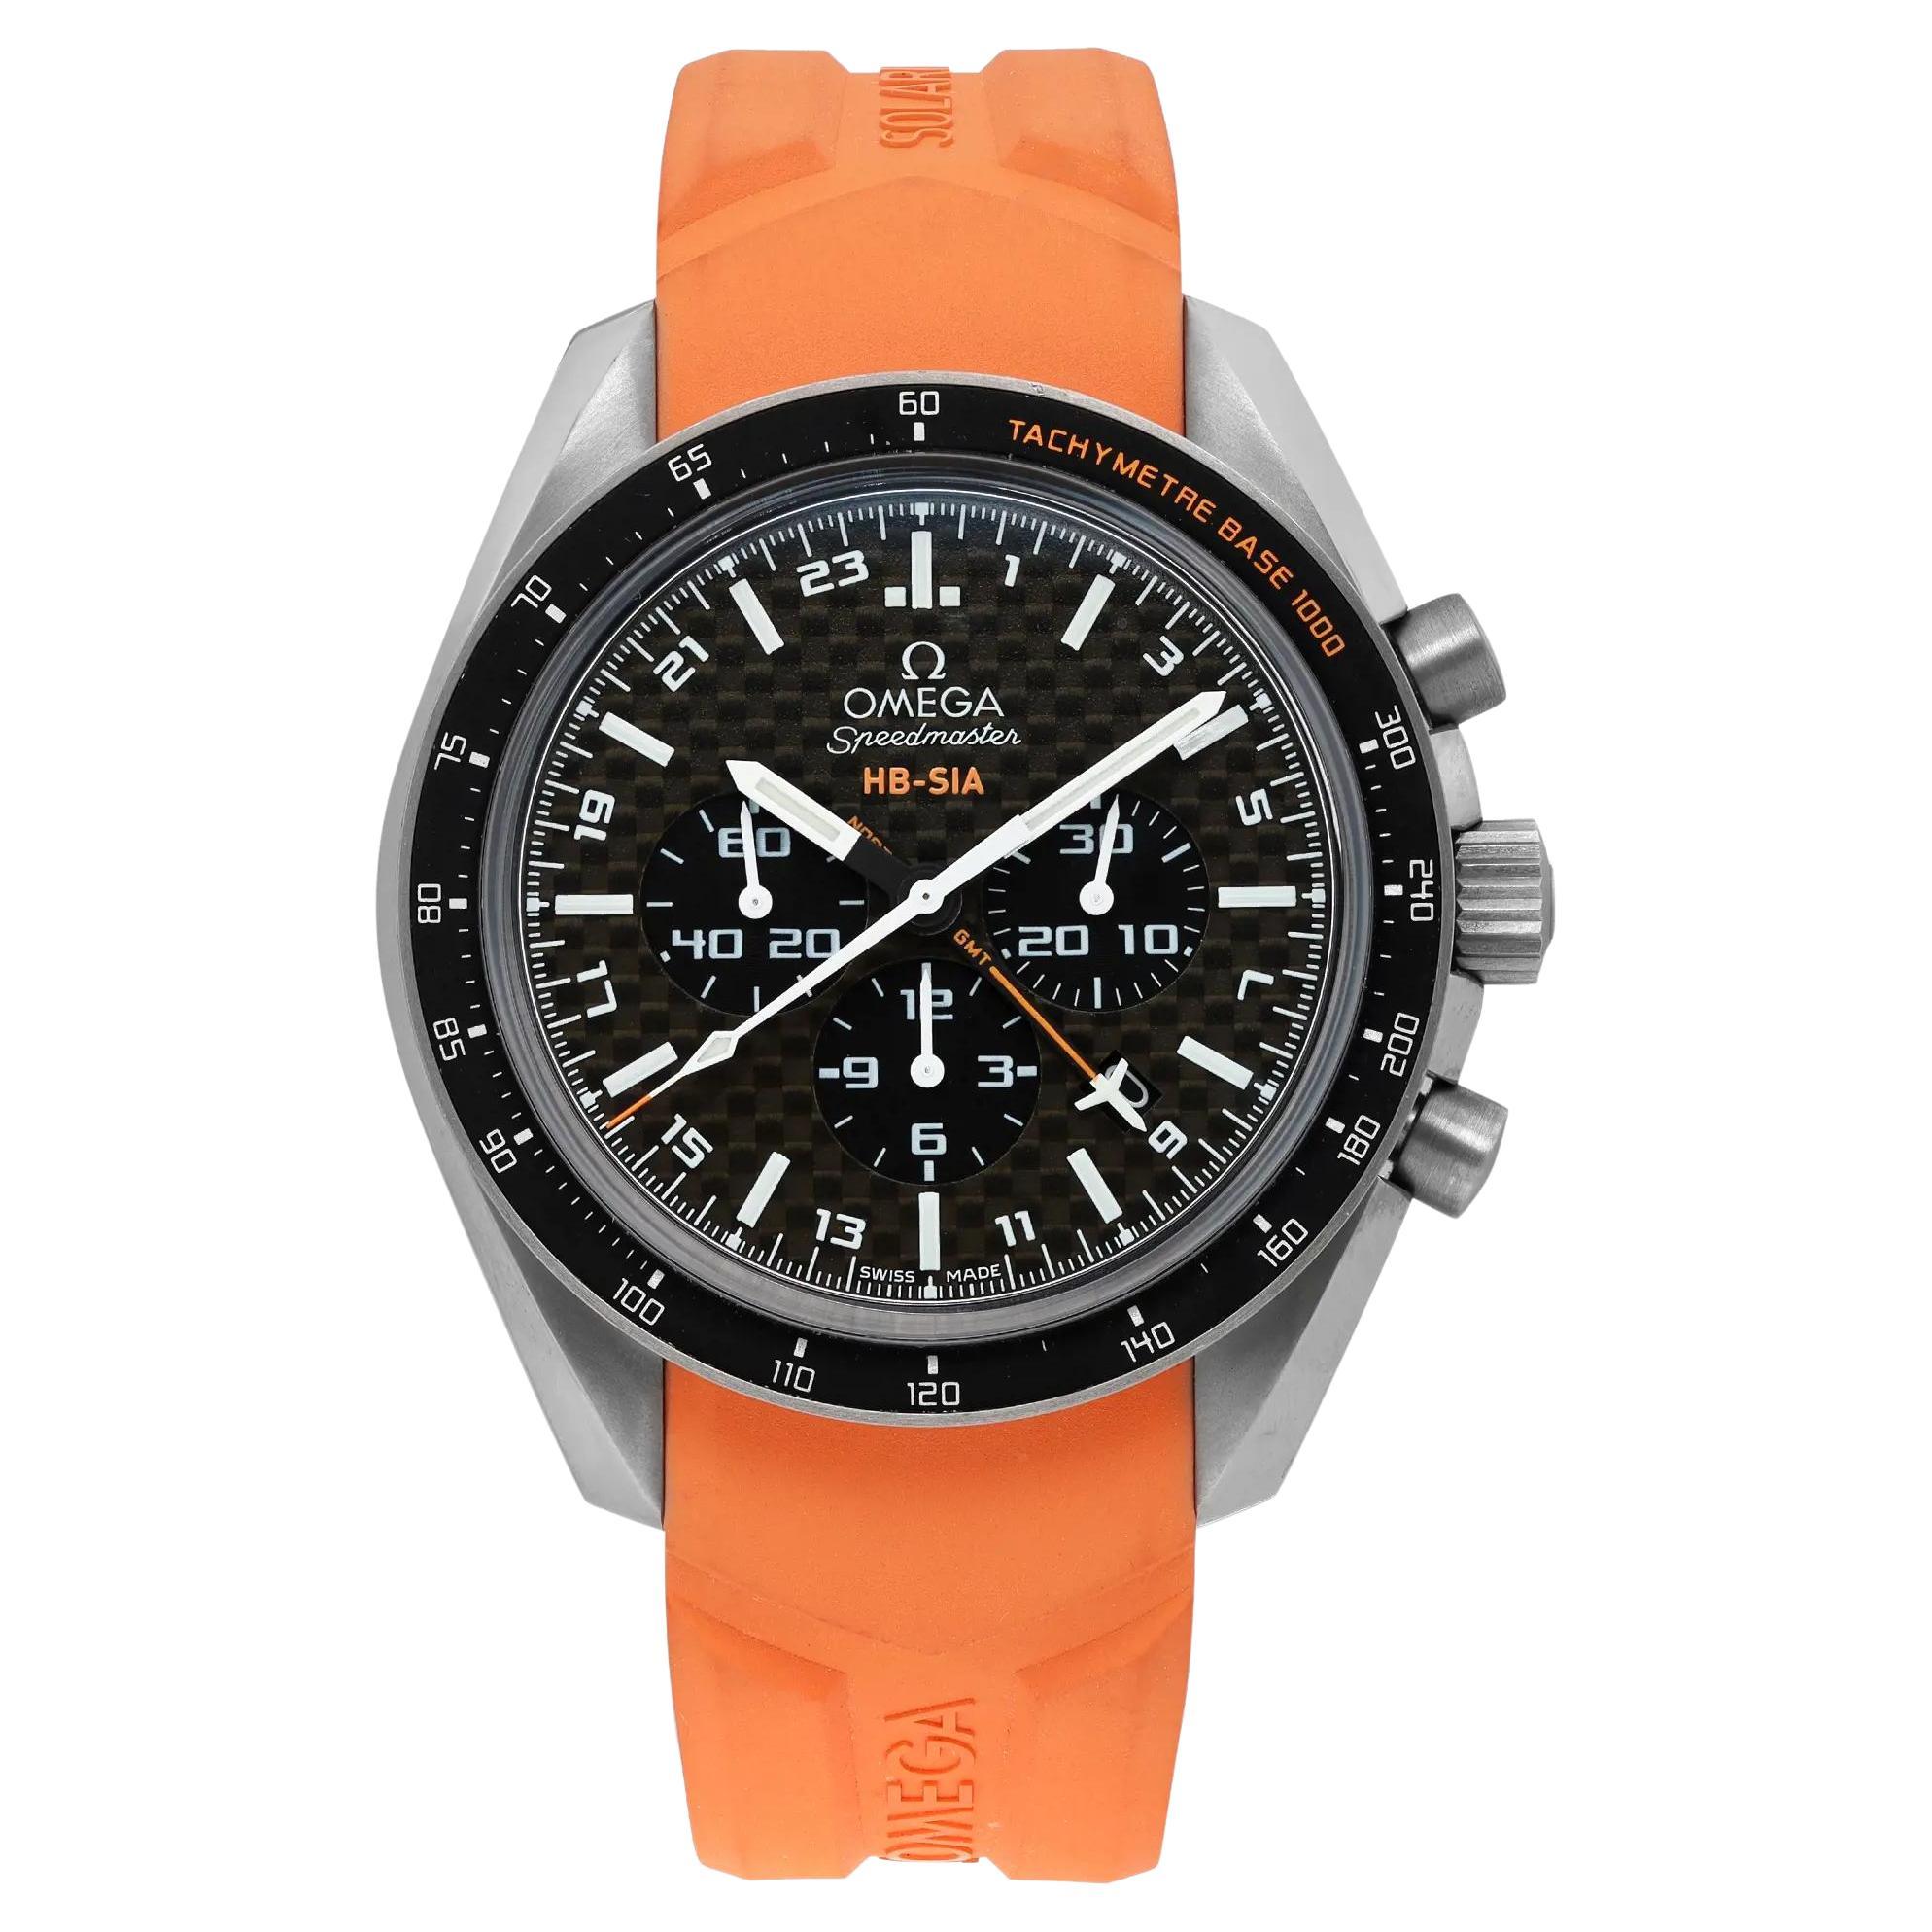 Omega Speedmaster HB-SIA GMT Titanium Chronograph Mens Watch 321.92.44.52.01.003